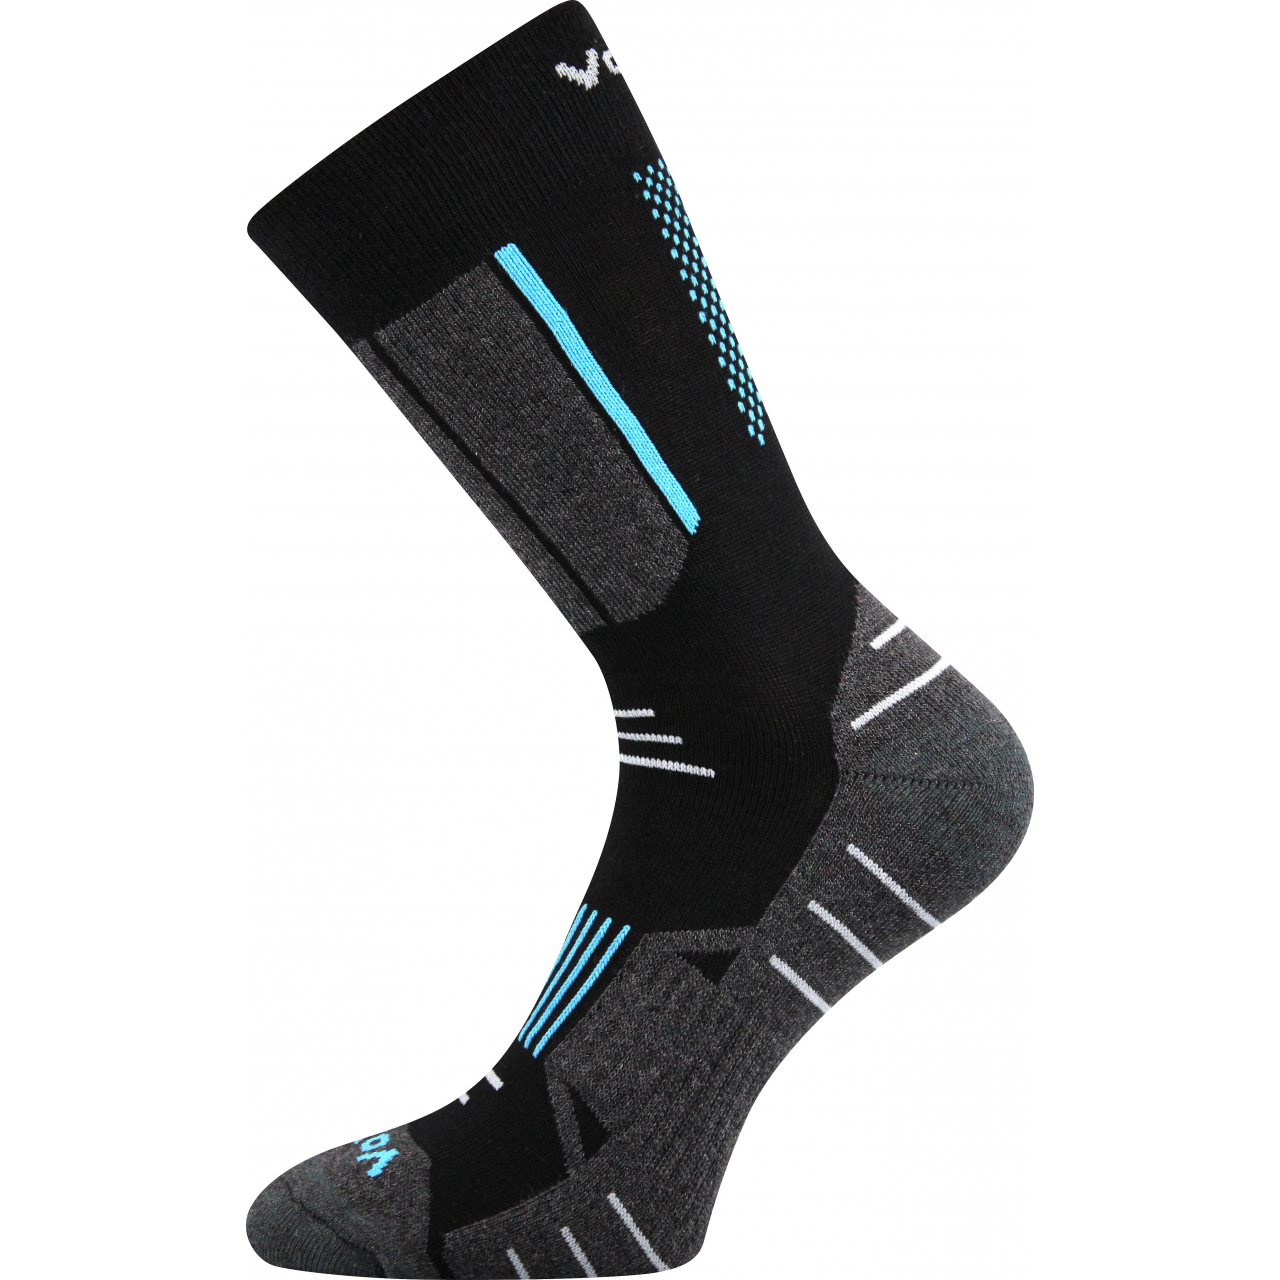 Ponožky turistické Voxx Avion - černé-šedé, 43-46